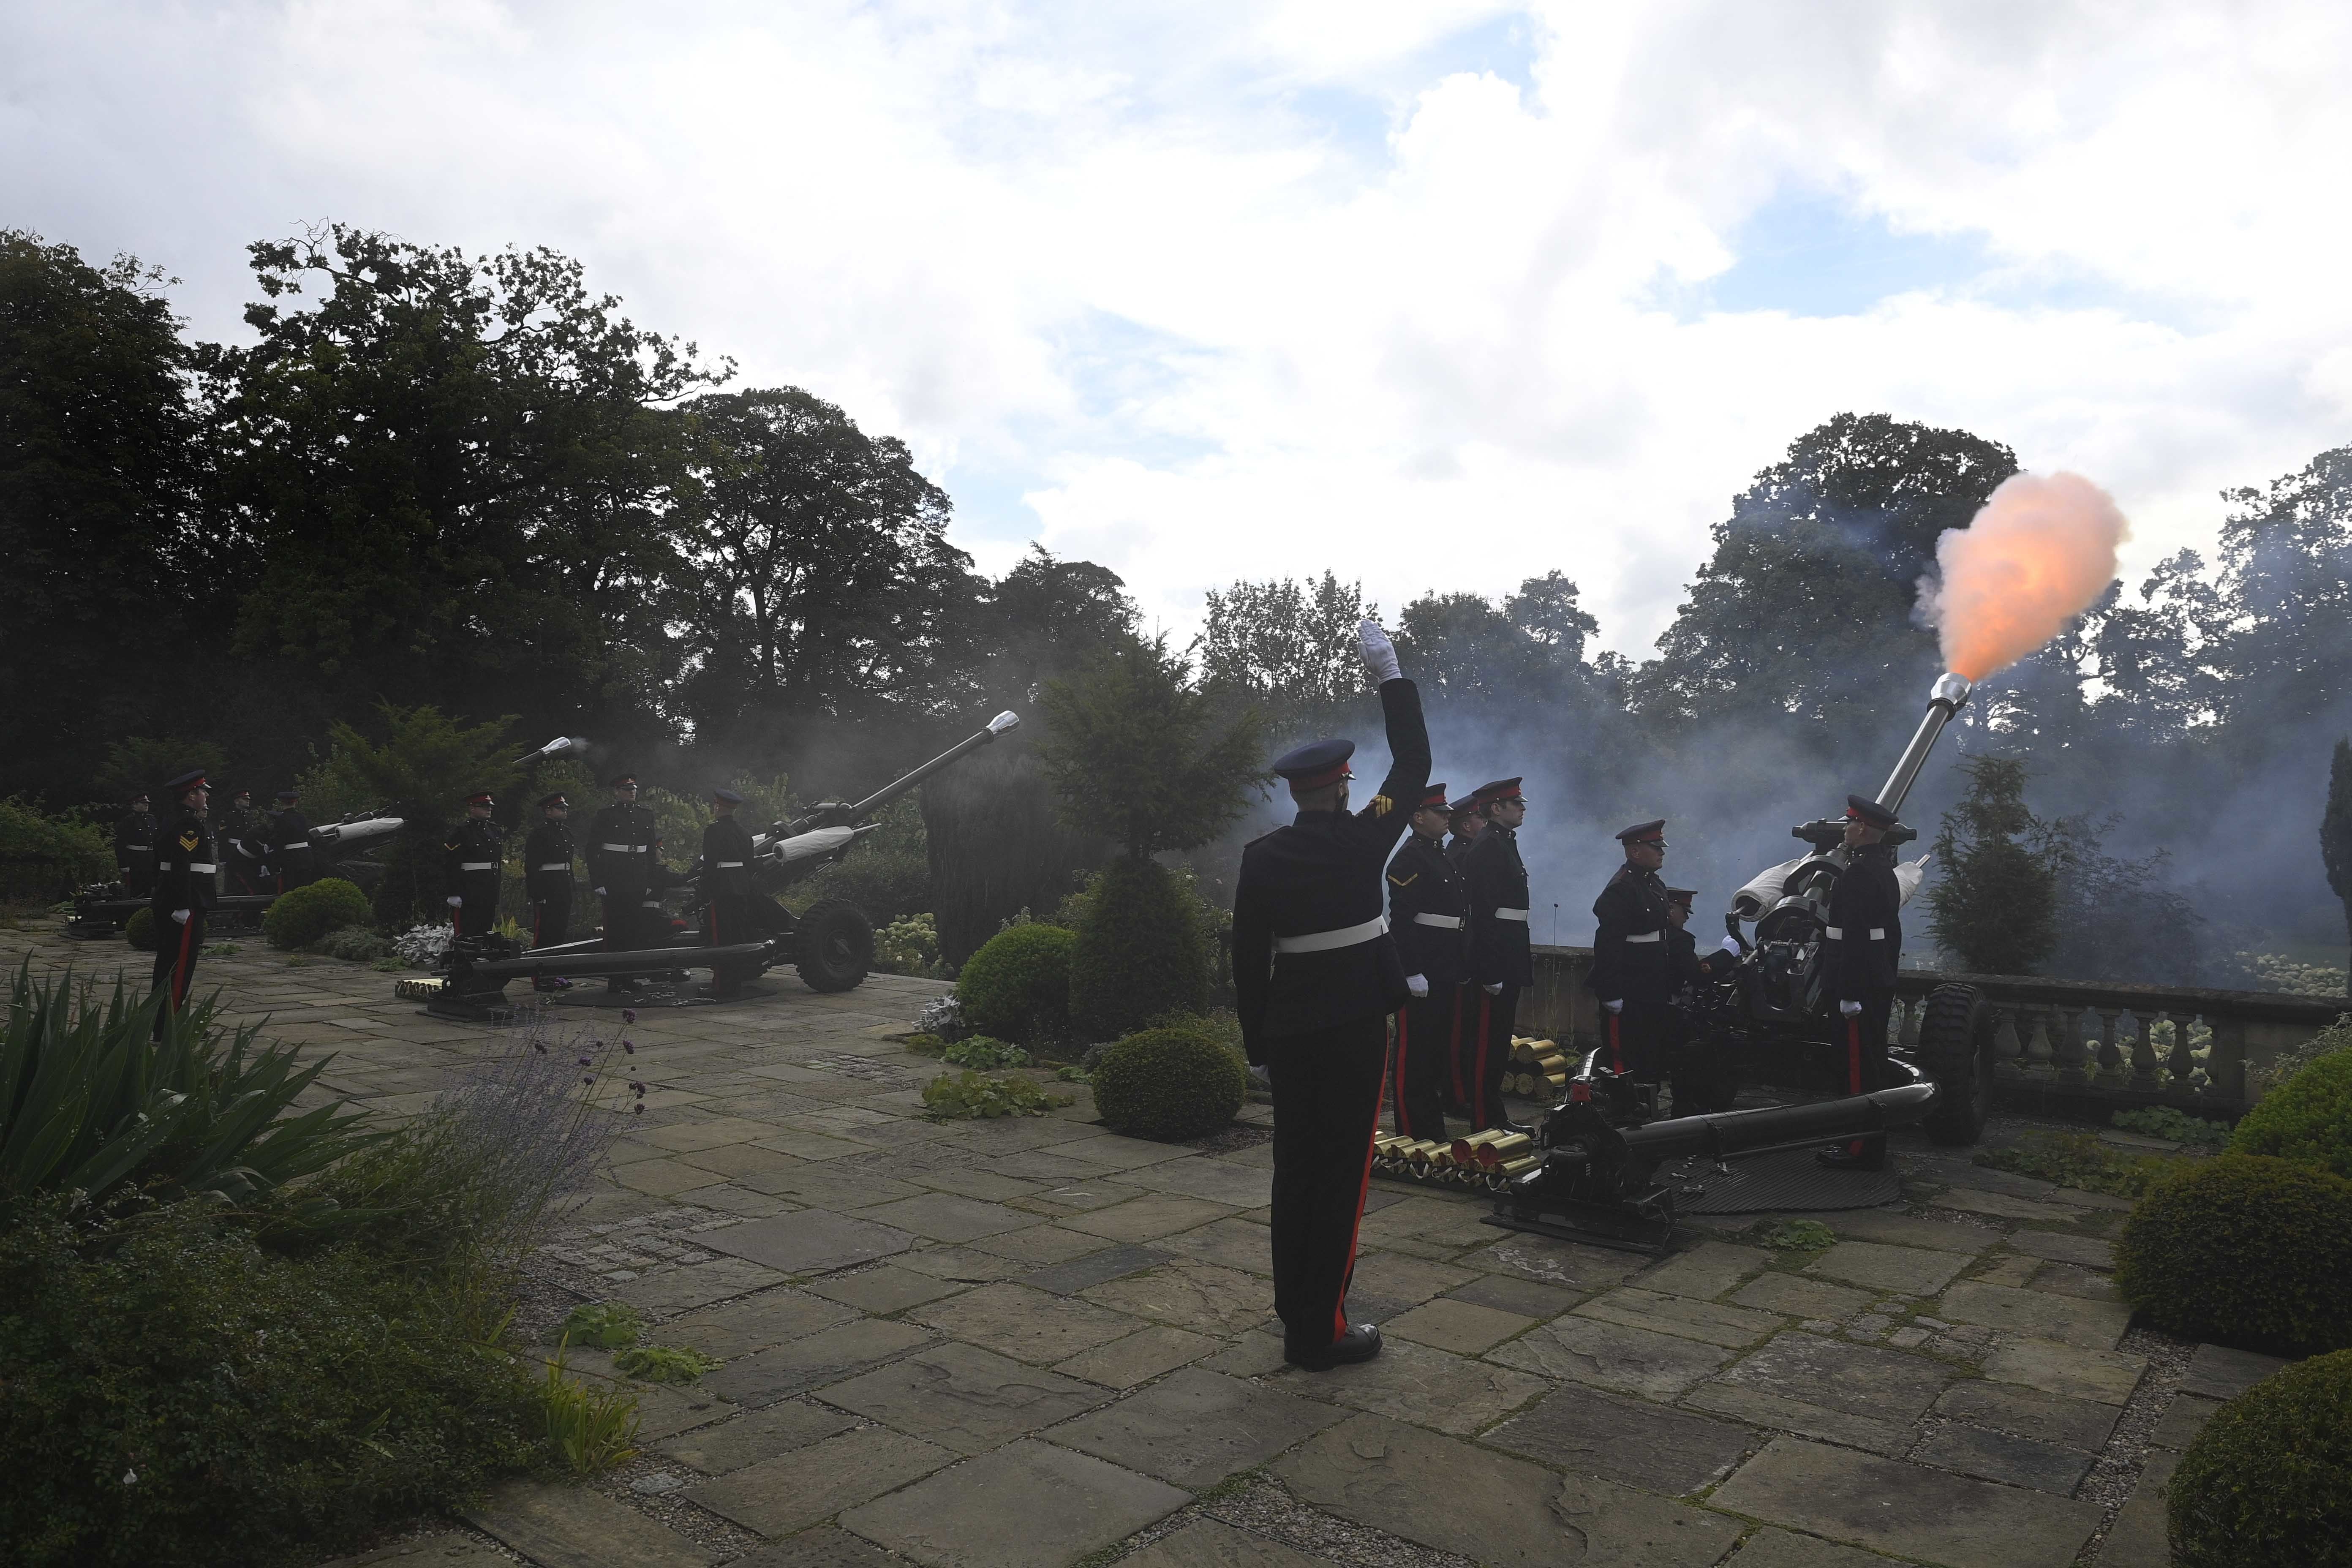 Members of 105 Regiment Royal Artillery during the Gun Salute at Hillsborough Castle (Mark Marlow/PA)